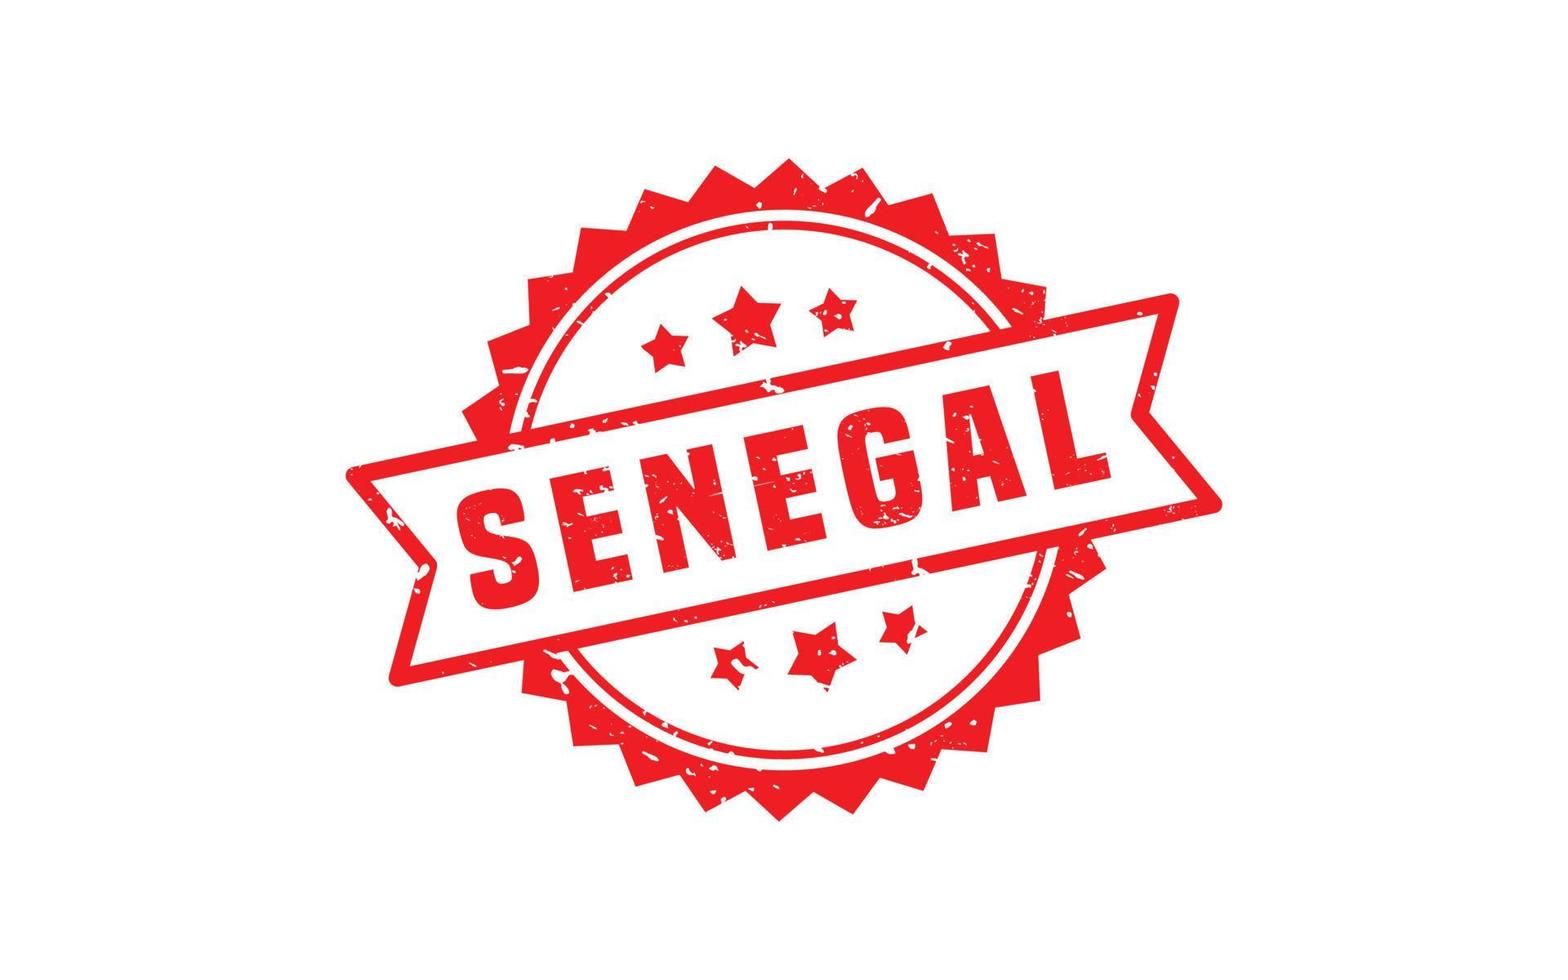 Senegal carimbo borracha com grunge estilo em branco fundo vetor